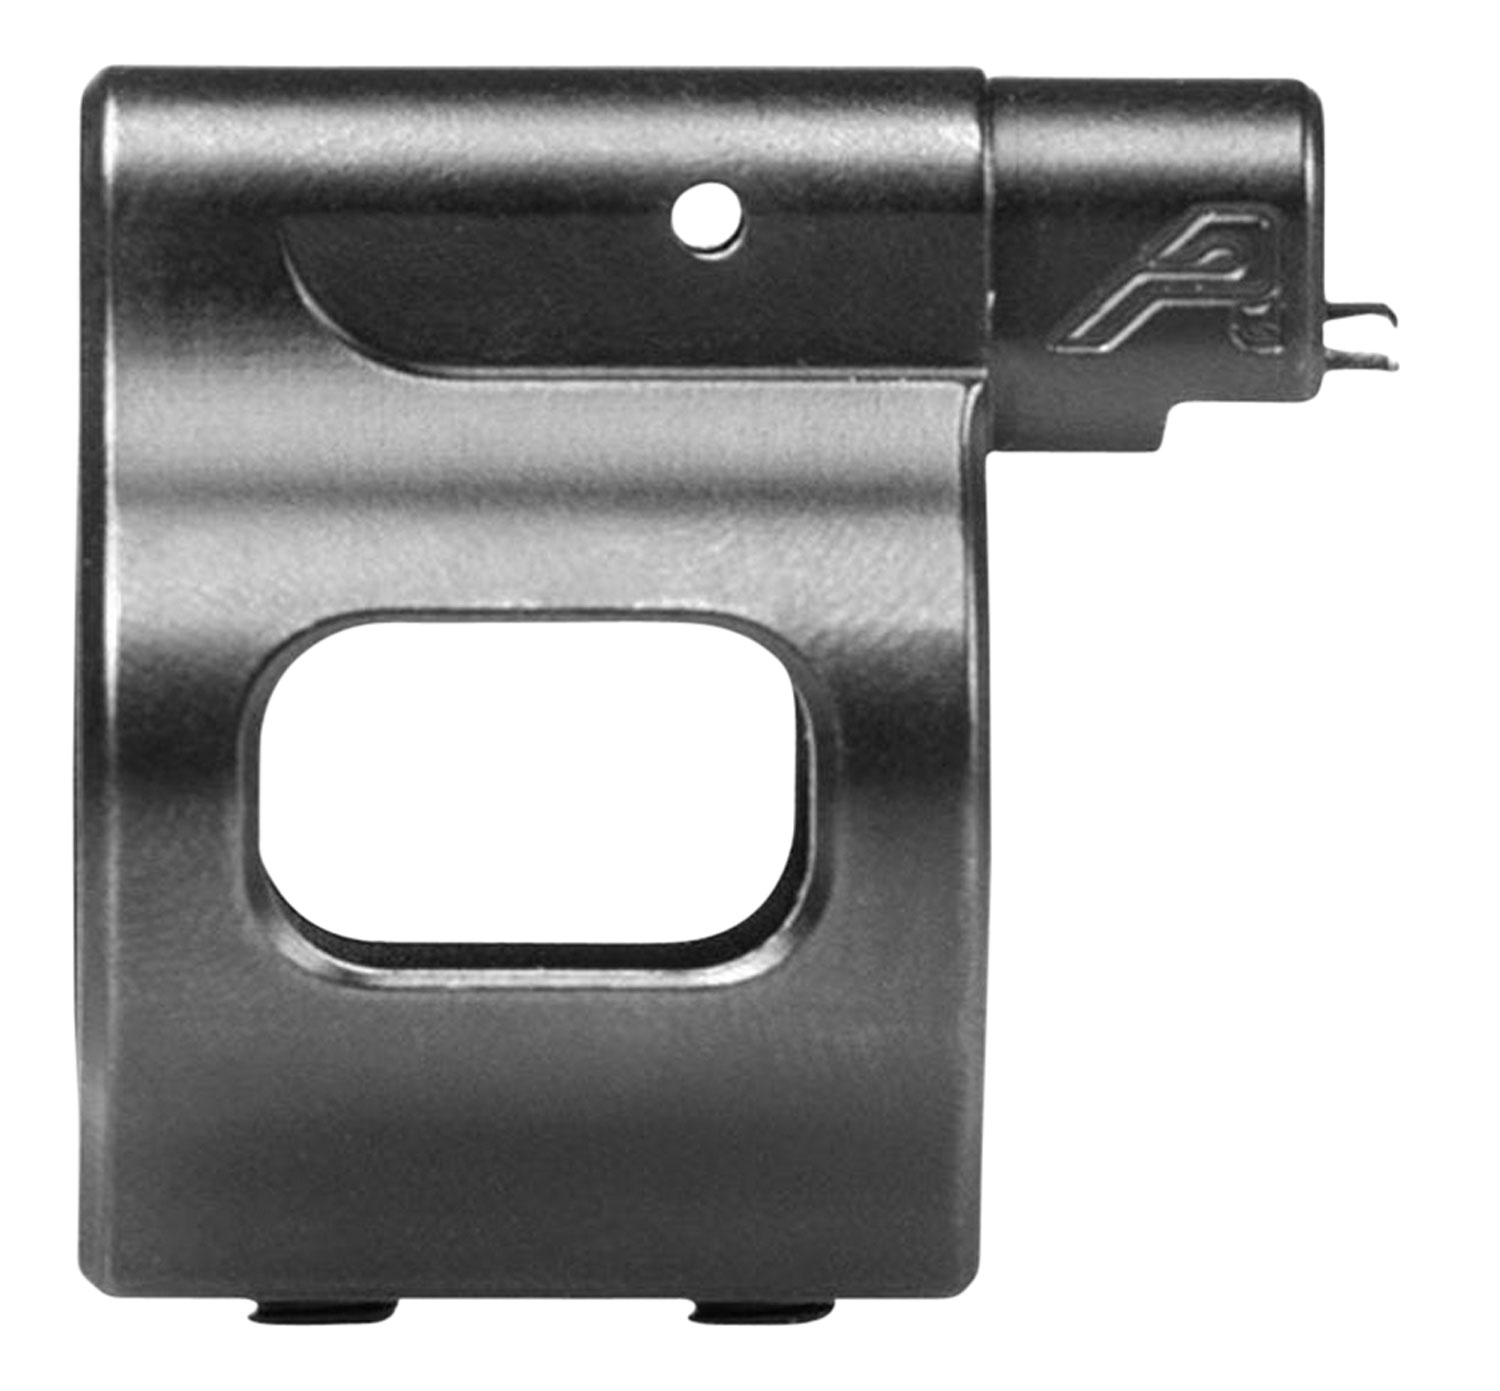 Aero Precision APRH101614C Low-Profile Adjustable .750 AR15/AR 308 Black Nitride Steel